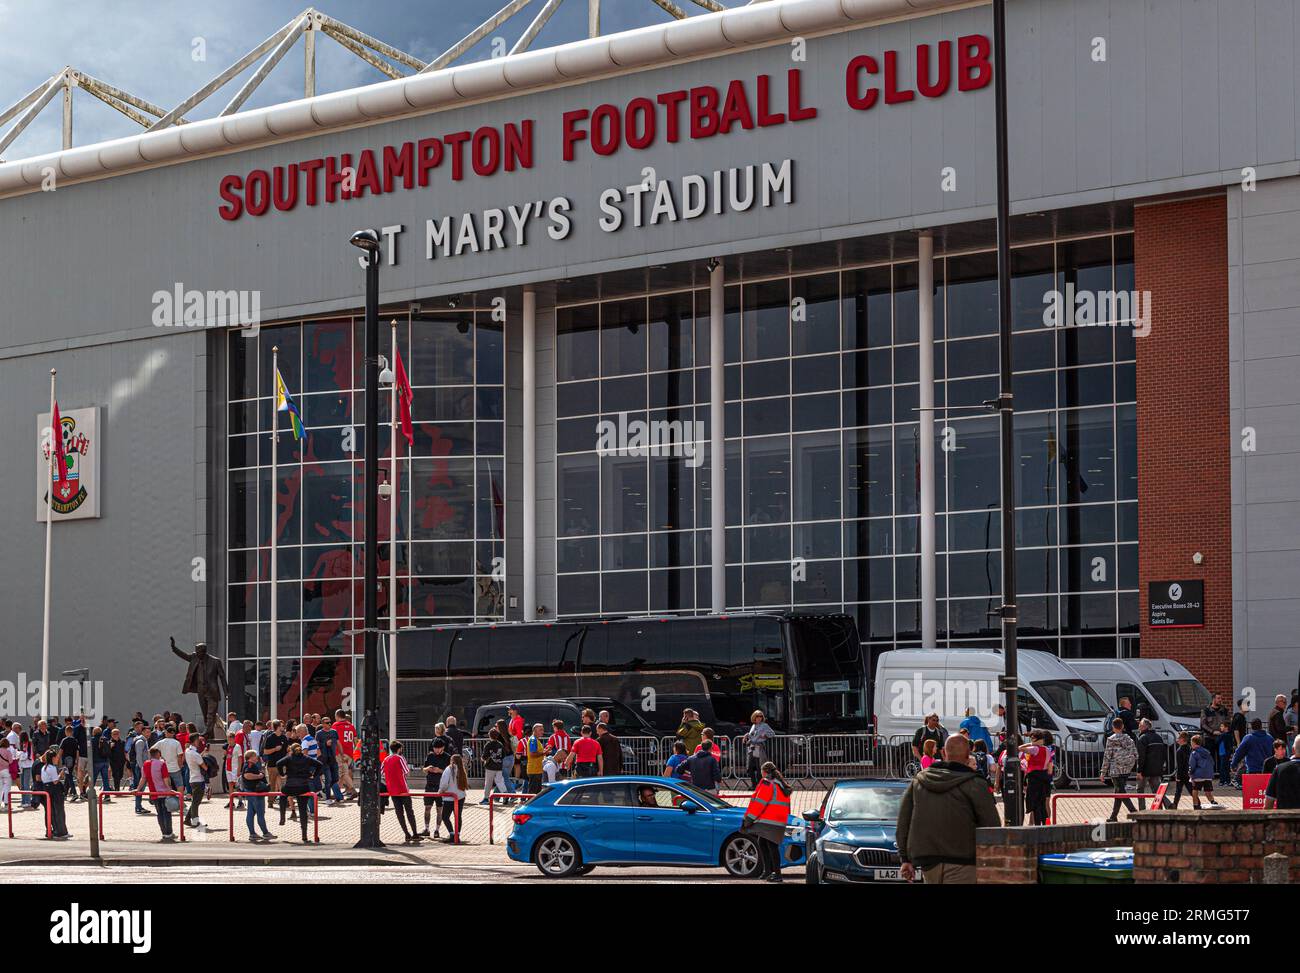 St. Mary's Stadium, Southampton Football Club,  Hampshire, England, UK. Stock Photo